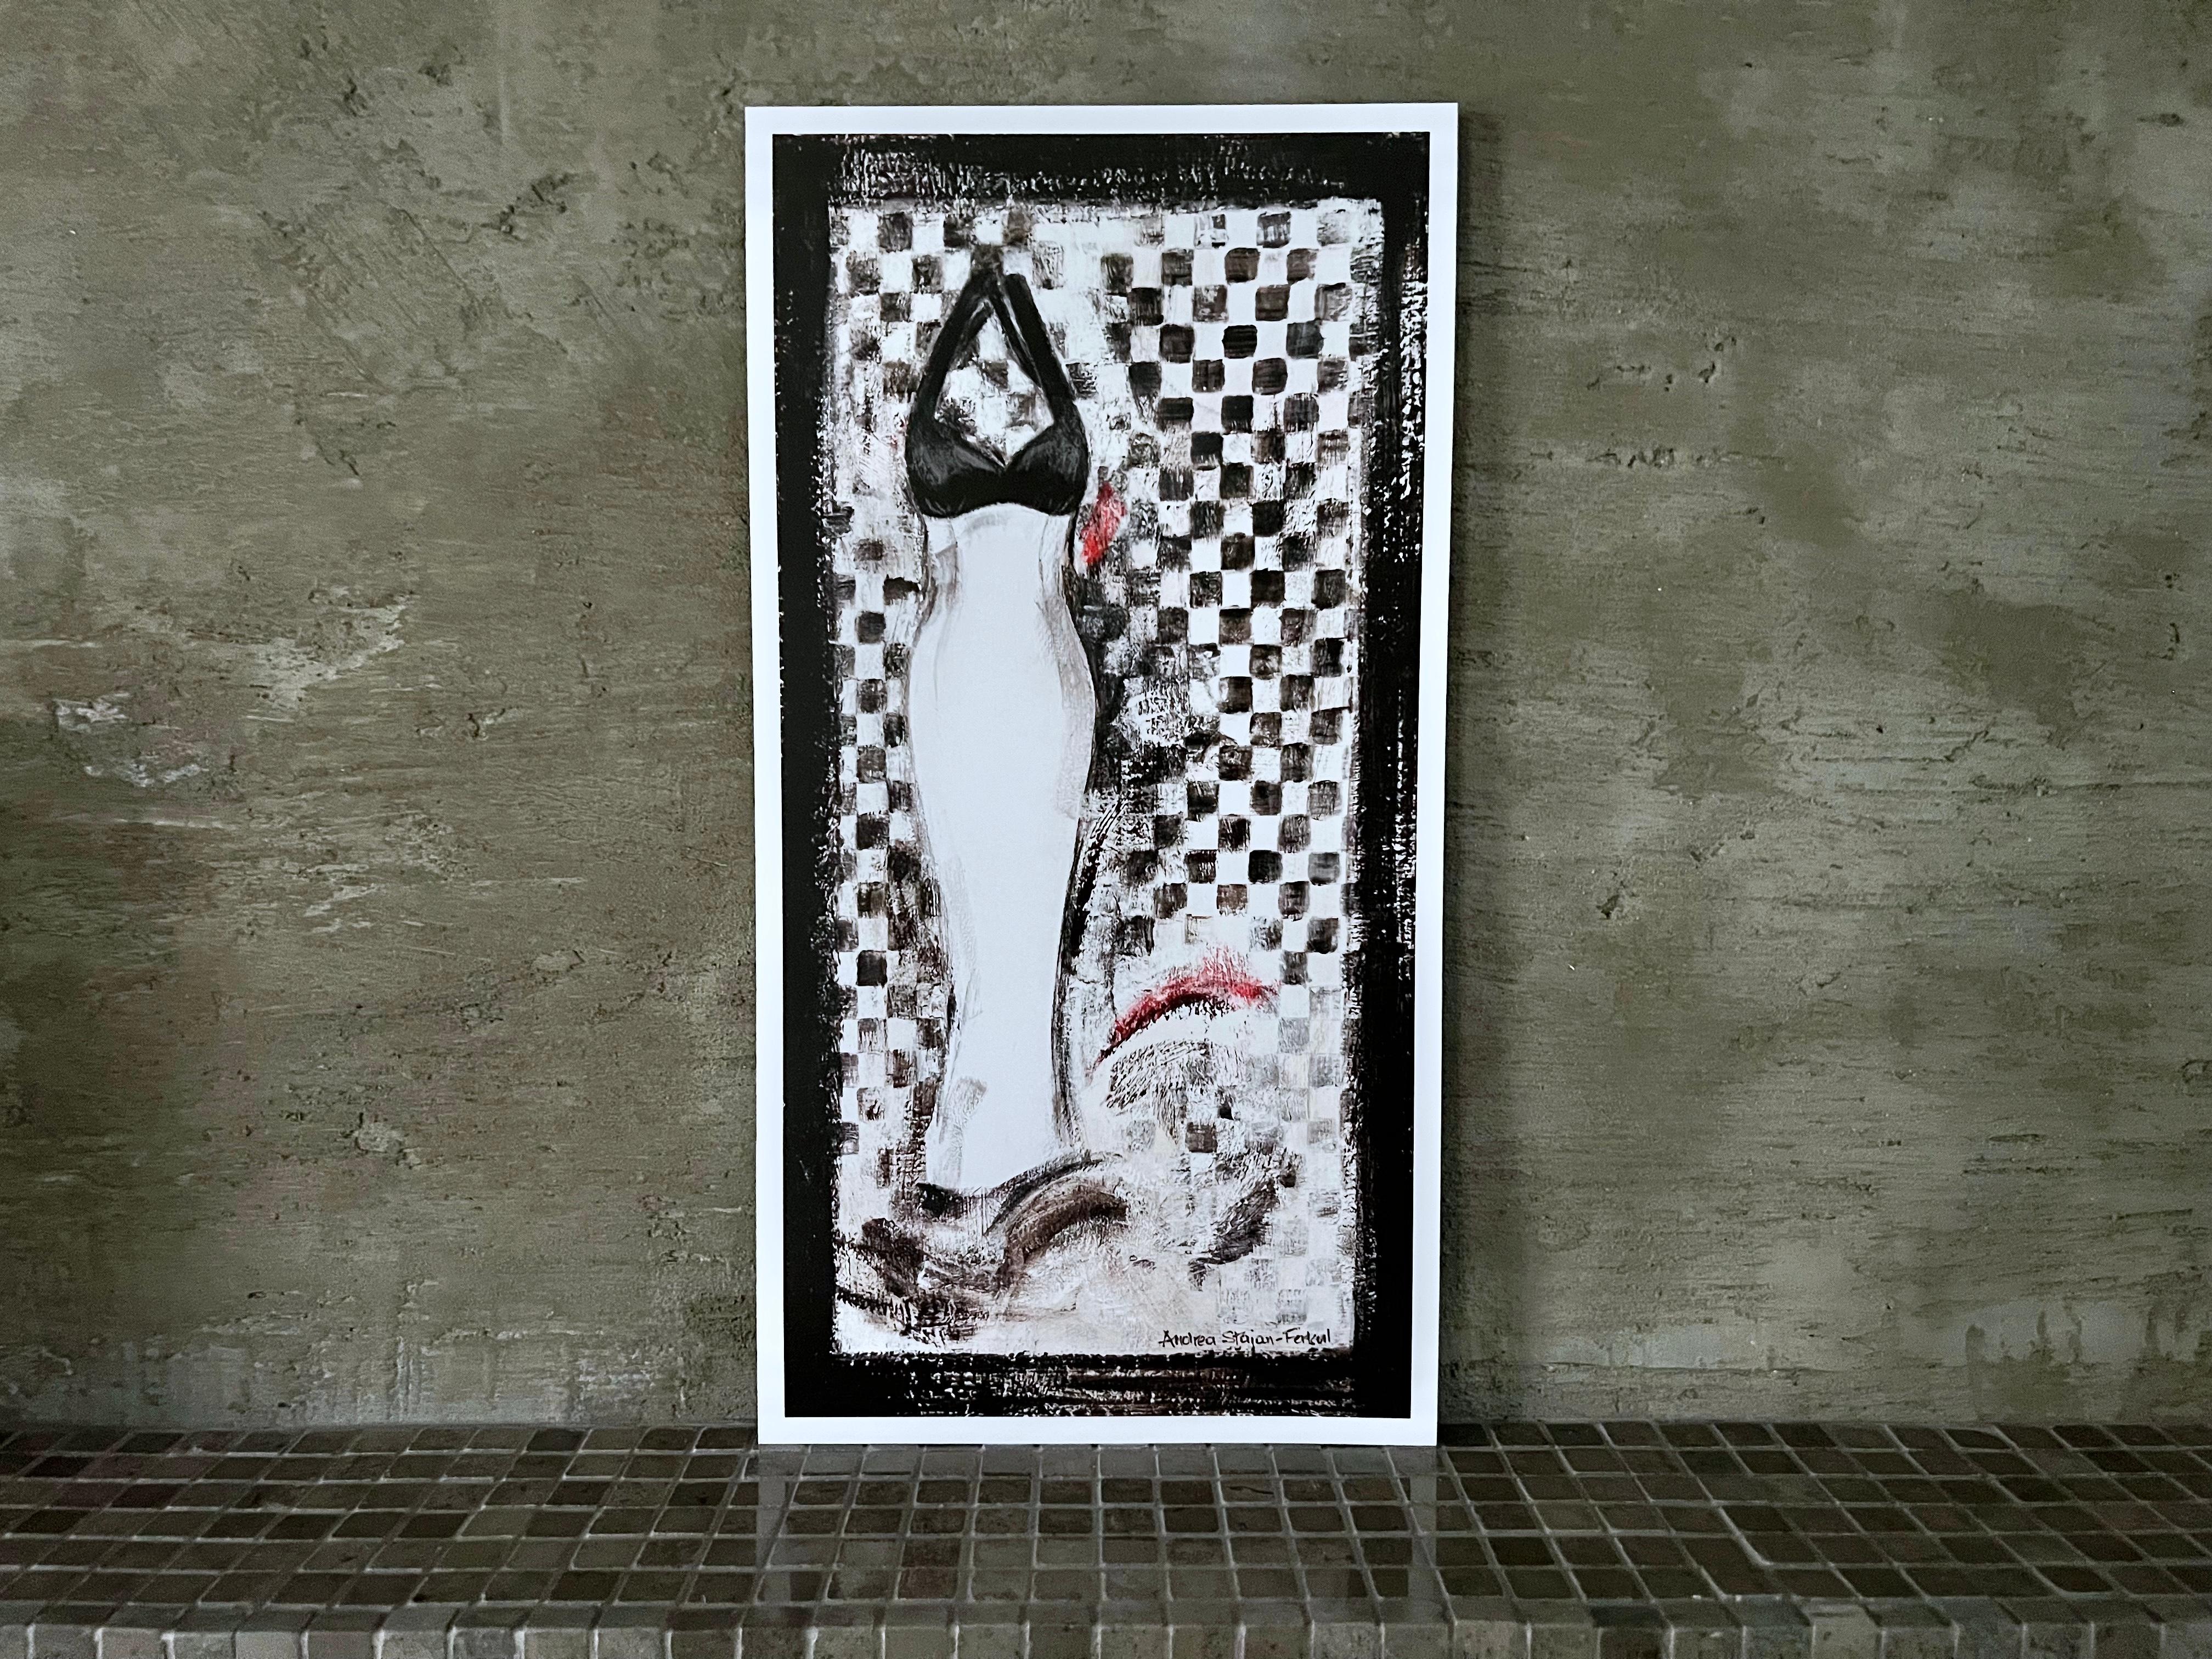 Andrea Stajan-Ferkul Figurative Print - Going Retro #3 - 7.5" x 14.5", Art Print, Vintage Dress, Black And White Fashion